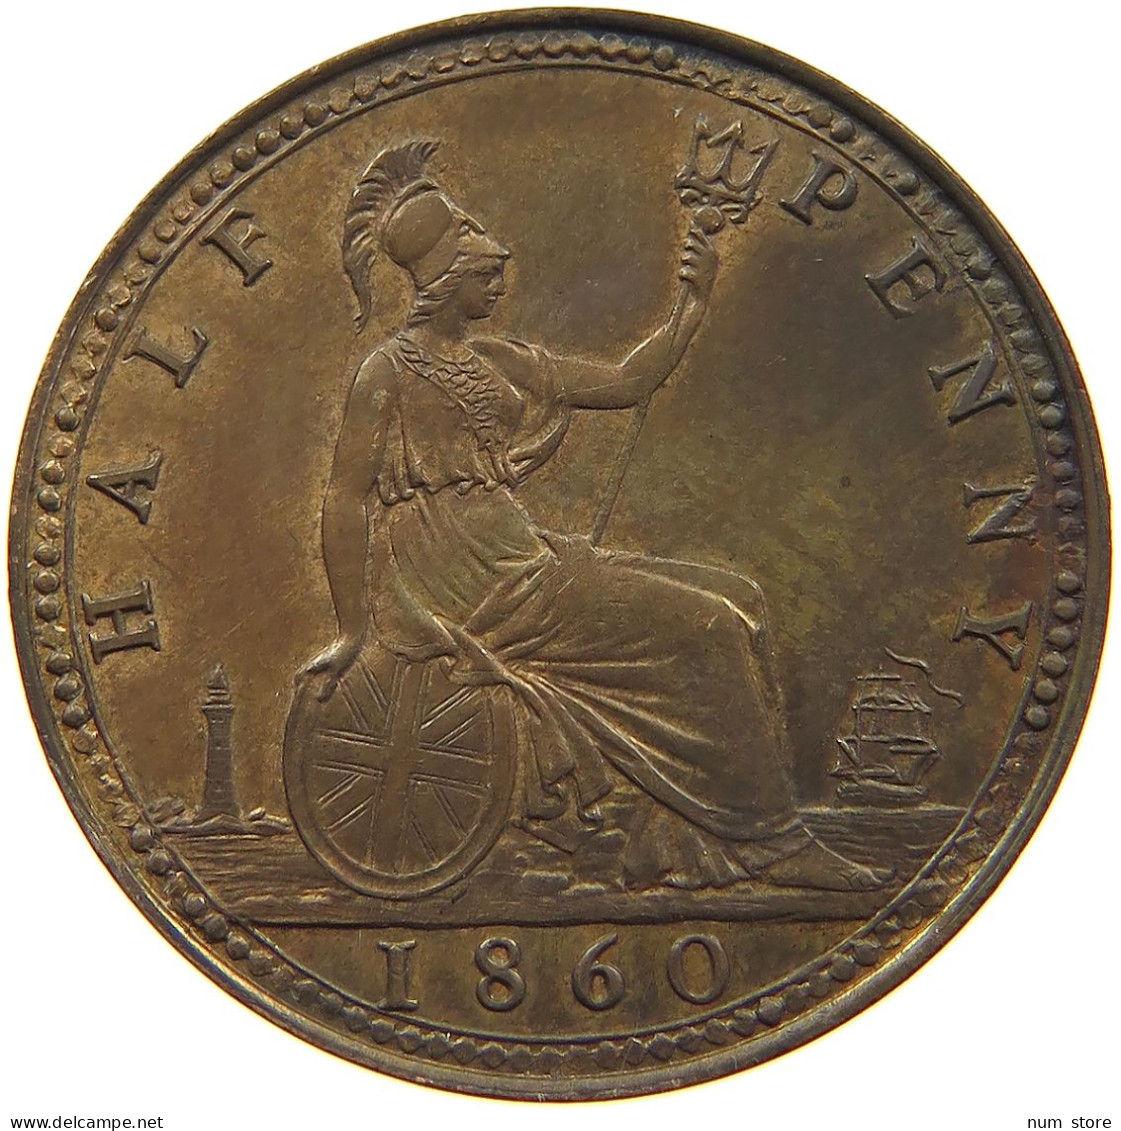 GREAT BRITAIN HALFPENNY 1860 Victoria 1837-1901 #t138 0115 - C. 1/2 Penny